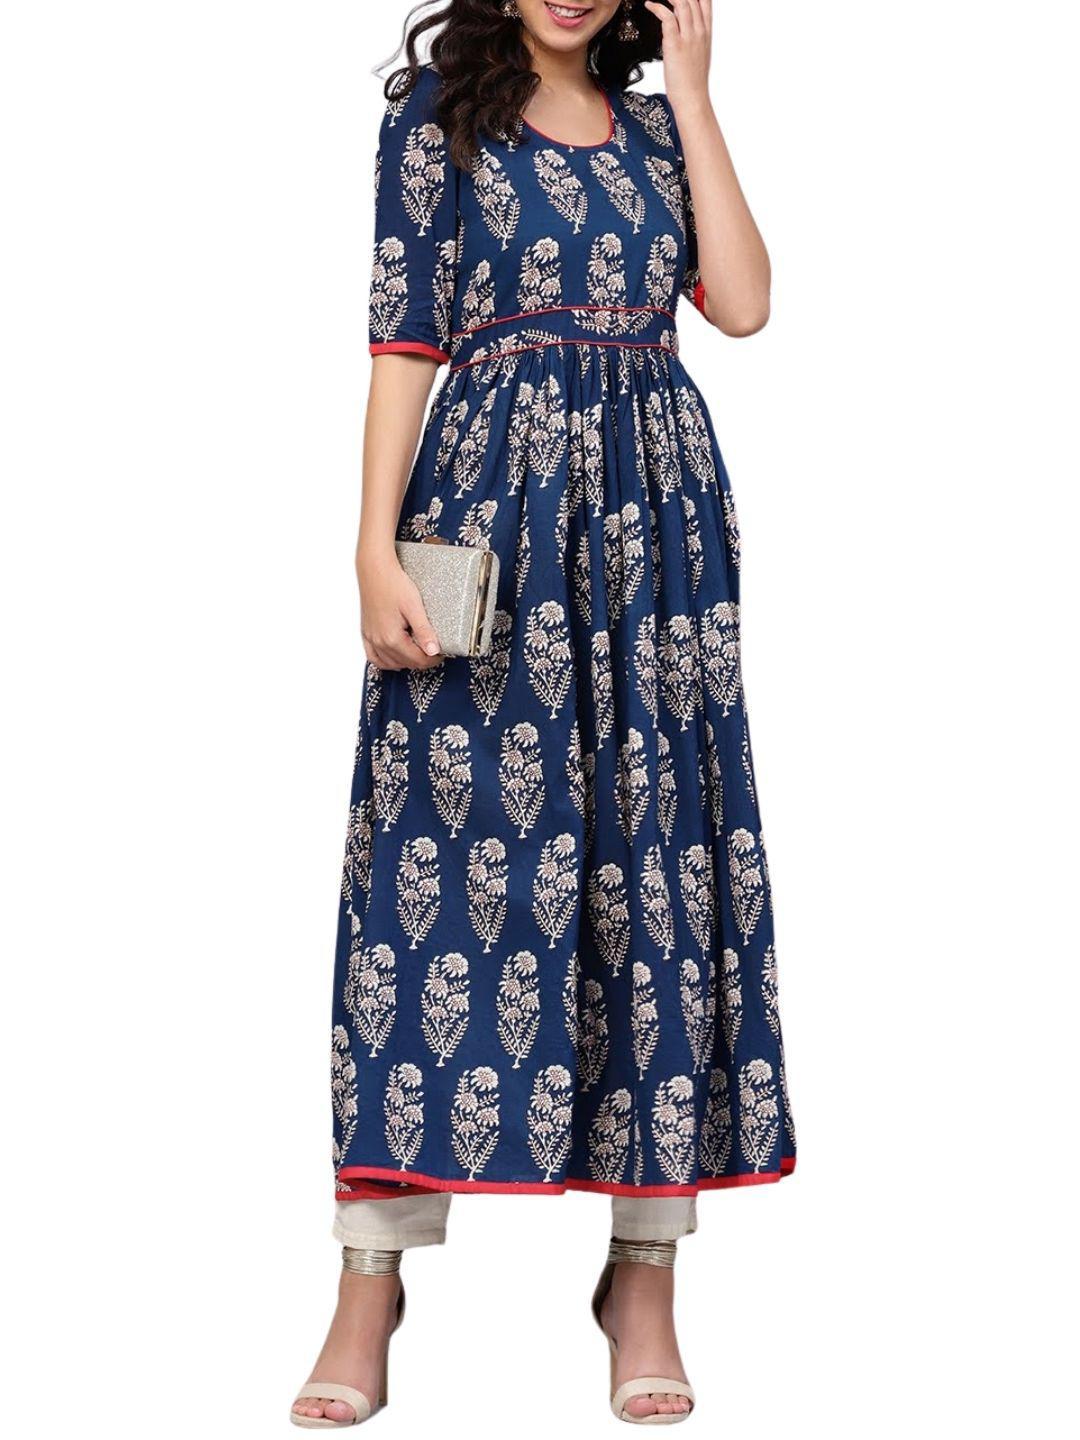 royal-blue-printed-floor-length-anarkali-dress-10004004BL, Women Indian Ethnic Clothing, Cotton Dress